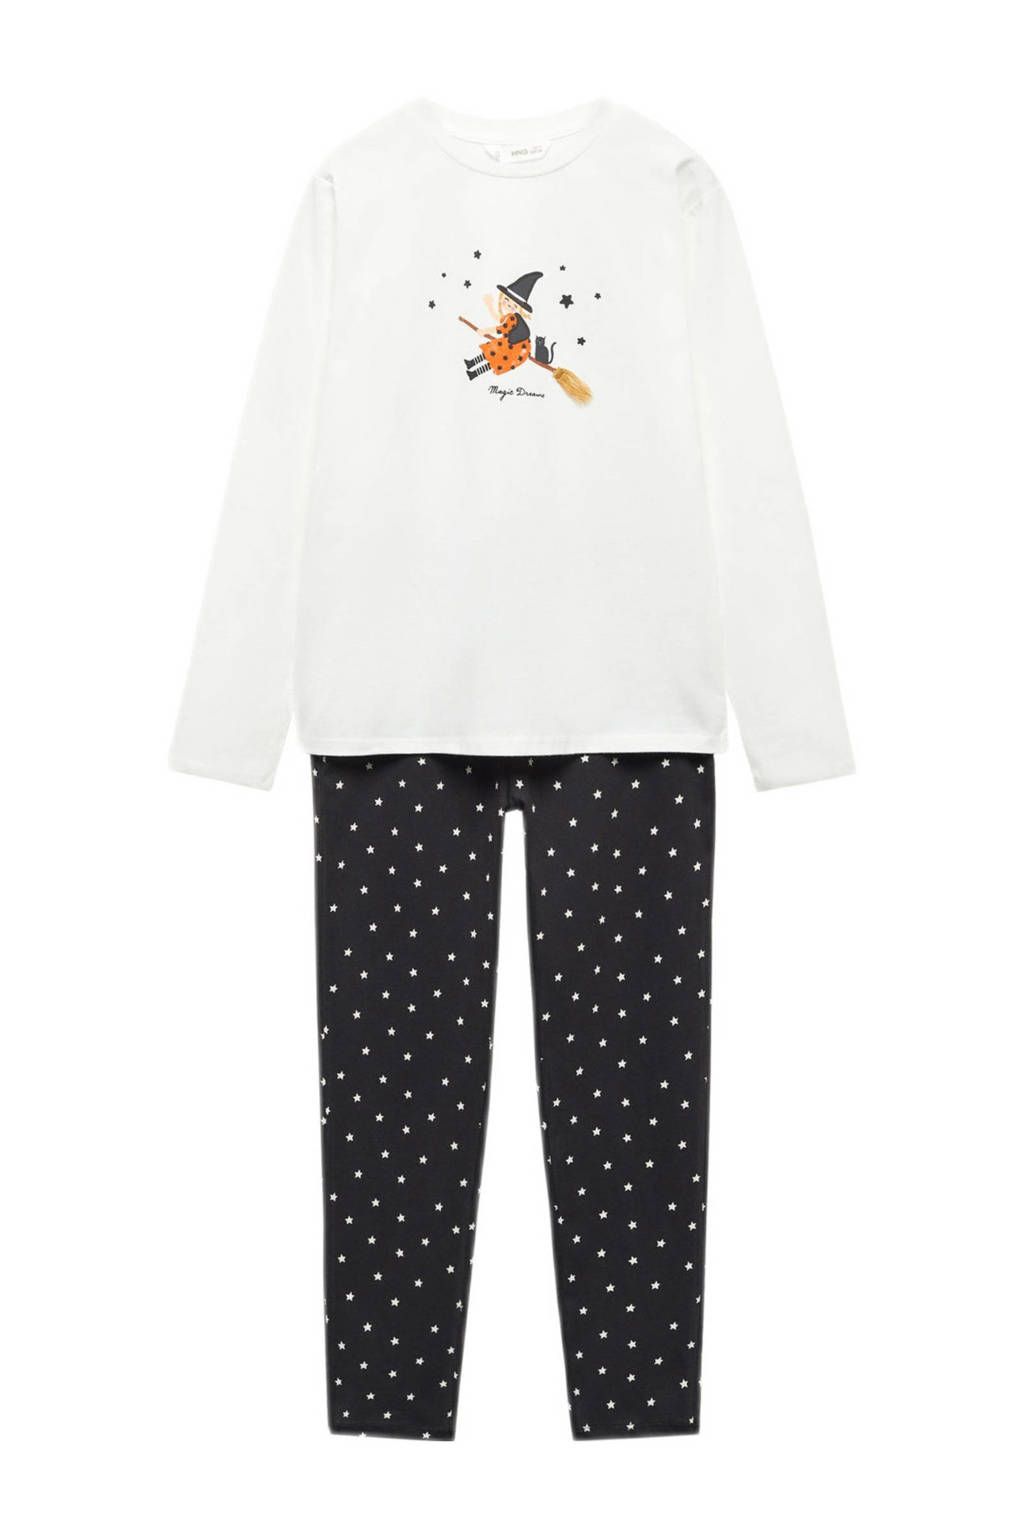 pyjama met printopdruk zwart/wit